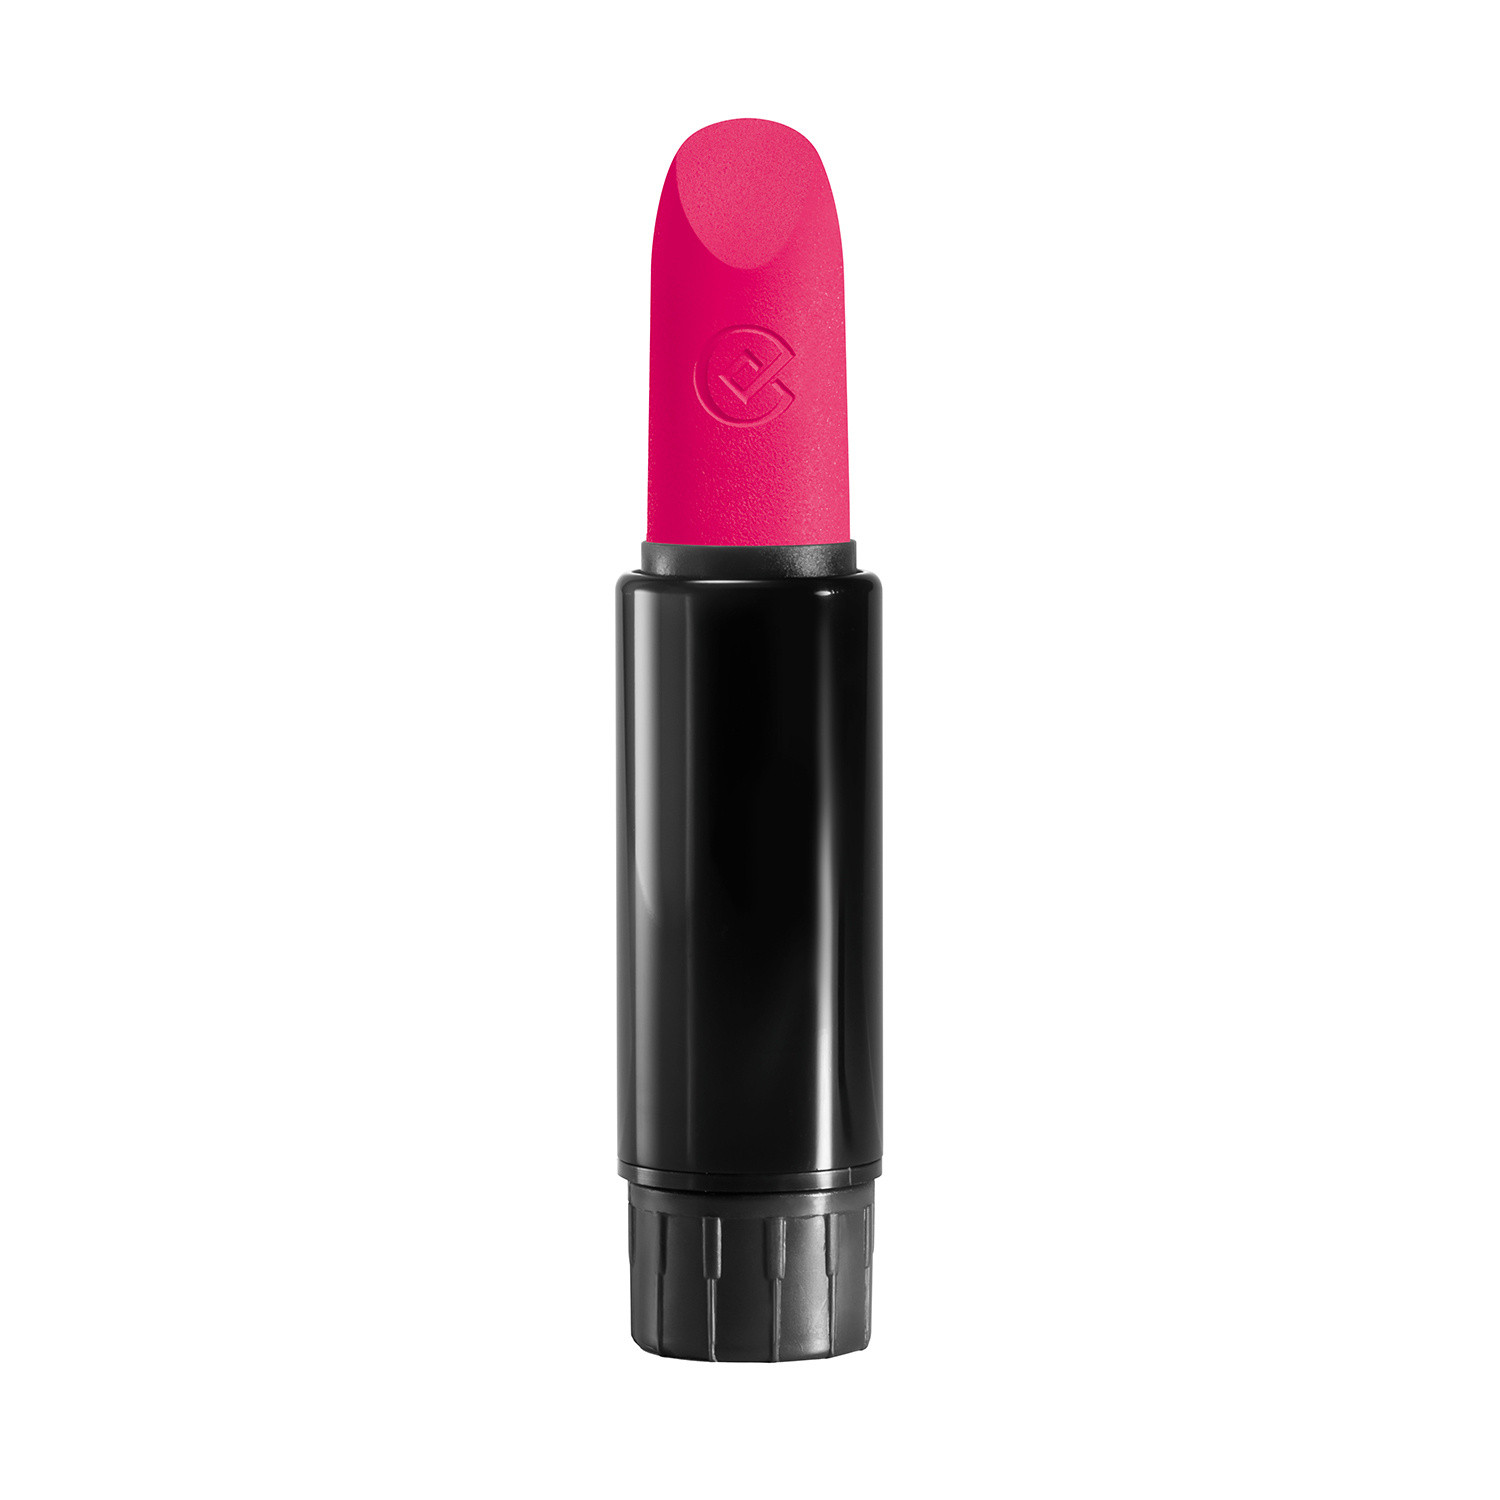 Collistar - Pure matte lipstick refill - 103 Fuchsia Petunia, Pink Fuchsia, large image number 0